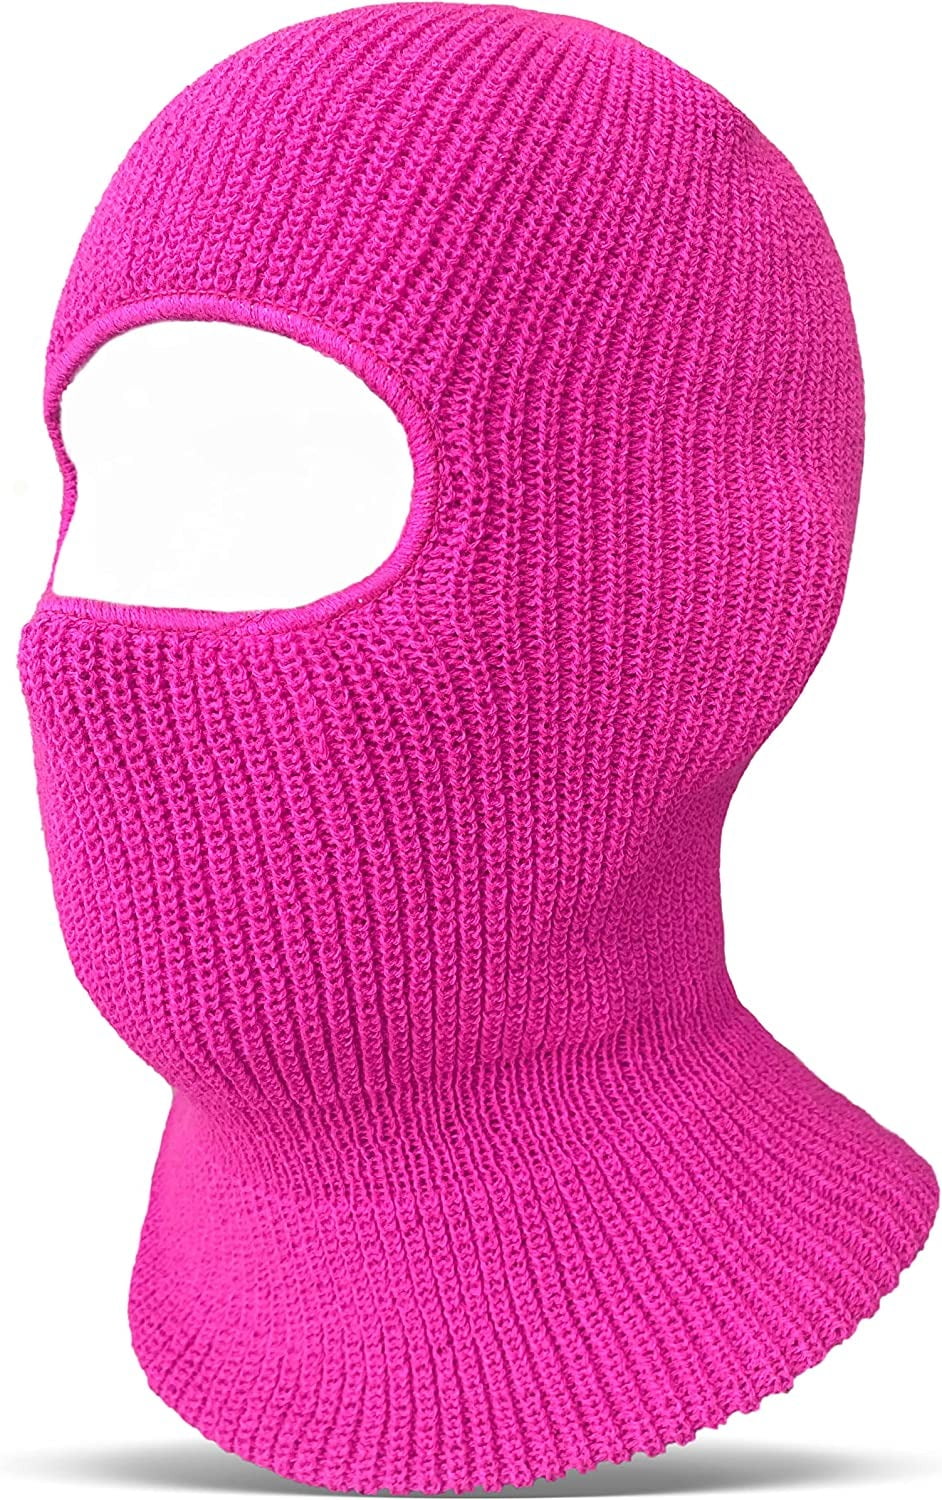  Pink Ski Mask